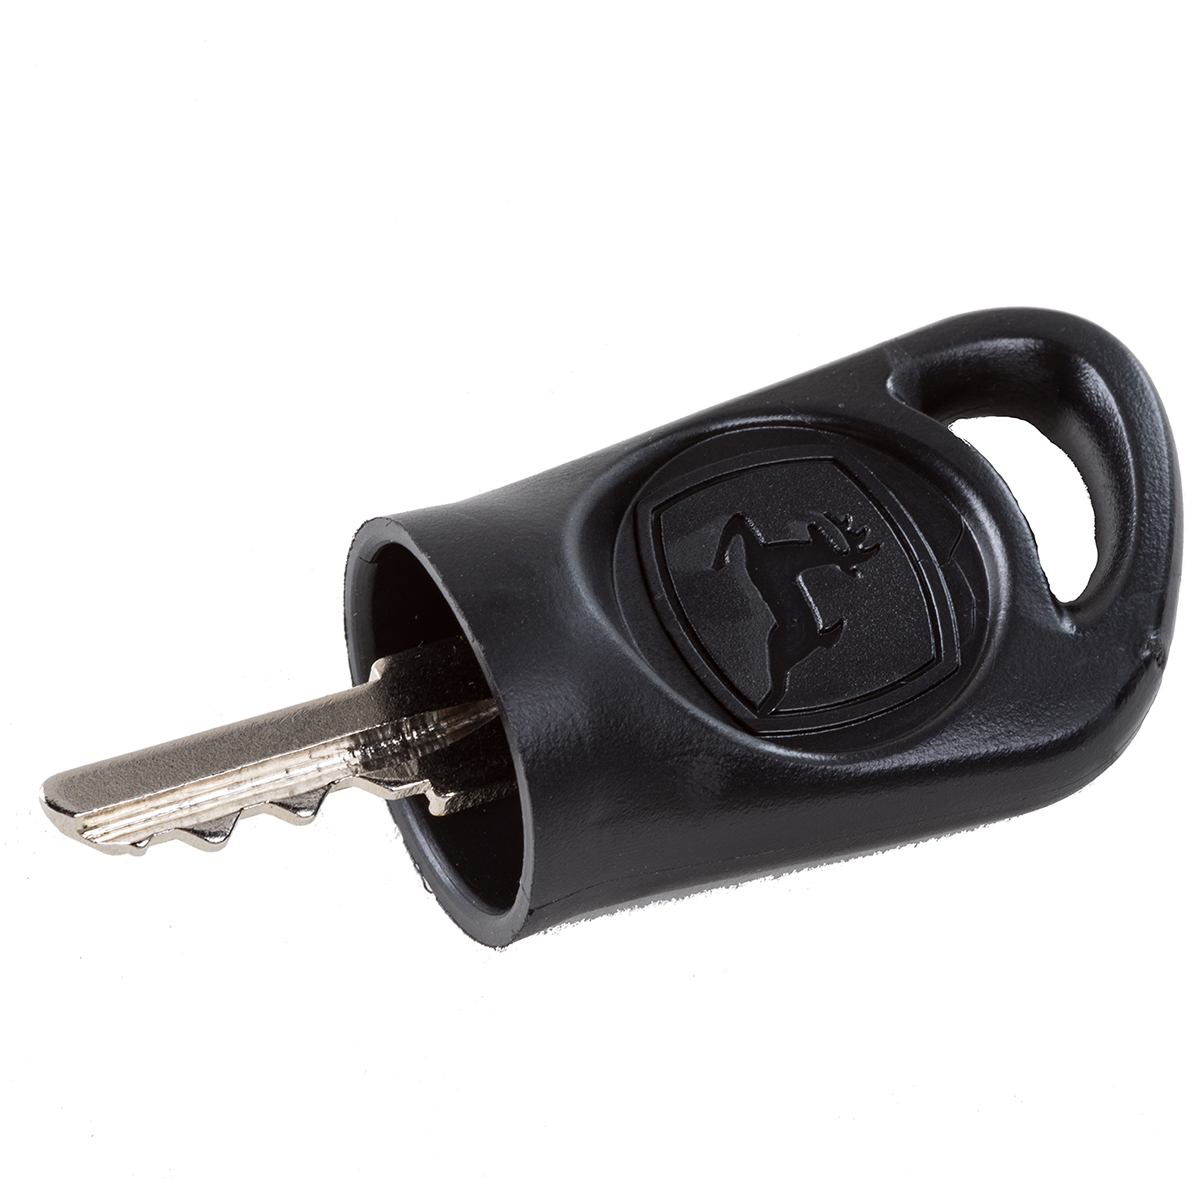 John Deere Ignition Key off of Z445 Part Number AUC12681 for sale online 